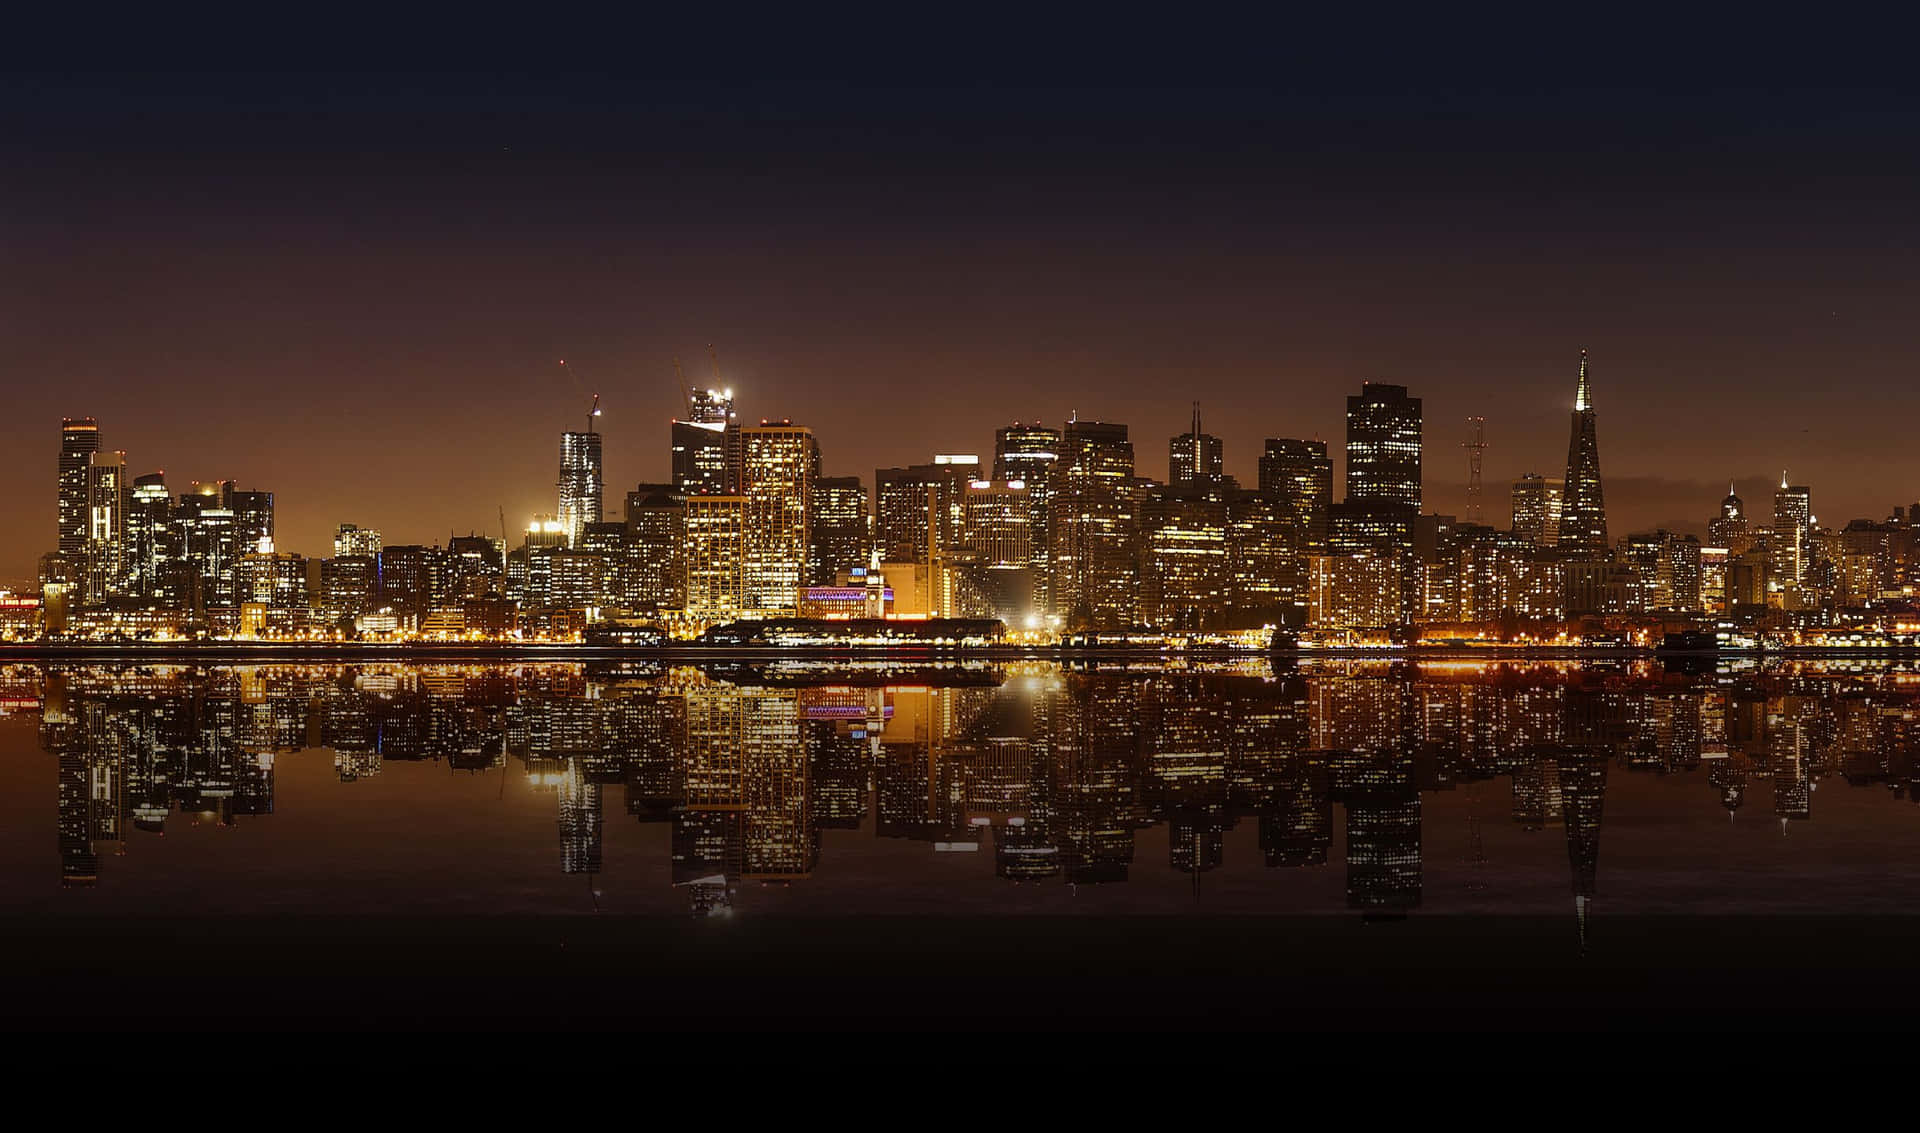 The iconic Bay Bridge and skyline of San Francisco, illuminated at night